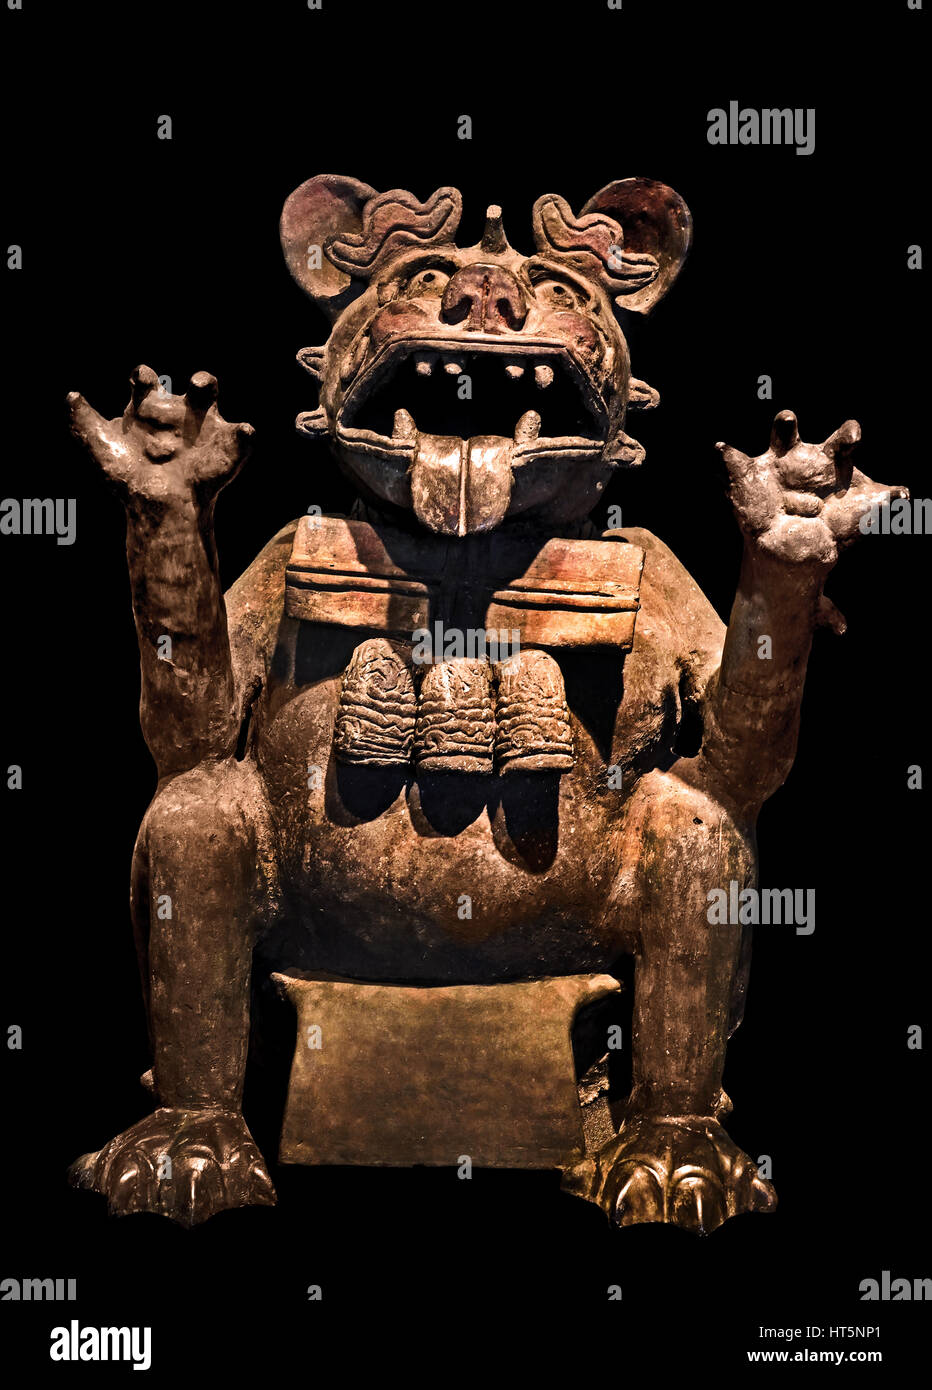 Bat Gott Tontopf 418-735 Mexiko Oaxaca zapotekischen (Kultur) 64,5 x 53 x 46,8 cm Zapoteken Zapotec Zivilisation Pre Columbian Mesoamerican Mittelamerika 500 v. Chr. - 900 n. Chr. American. Stockfoto